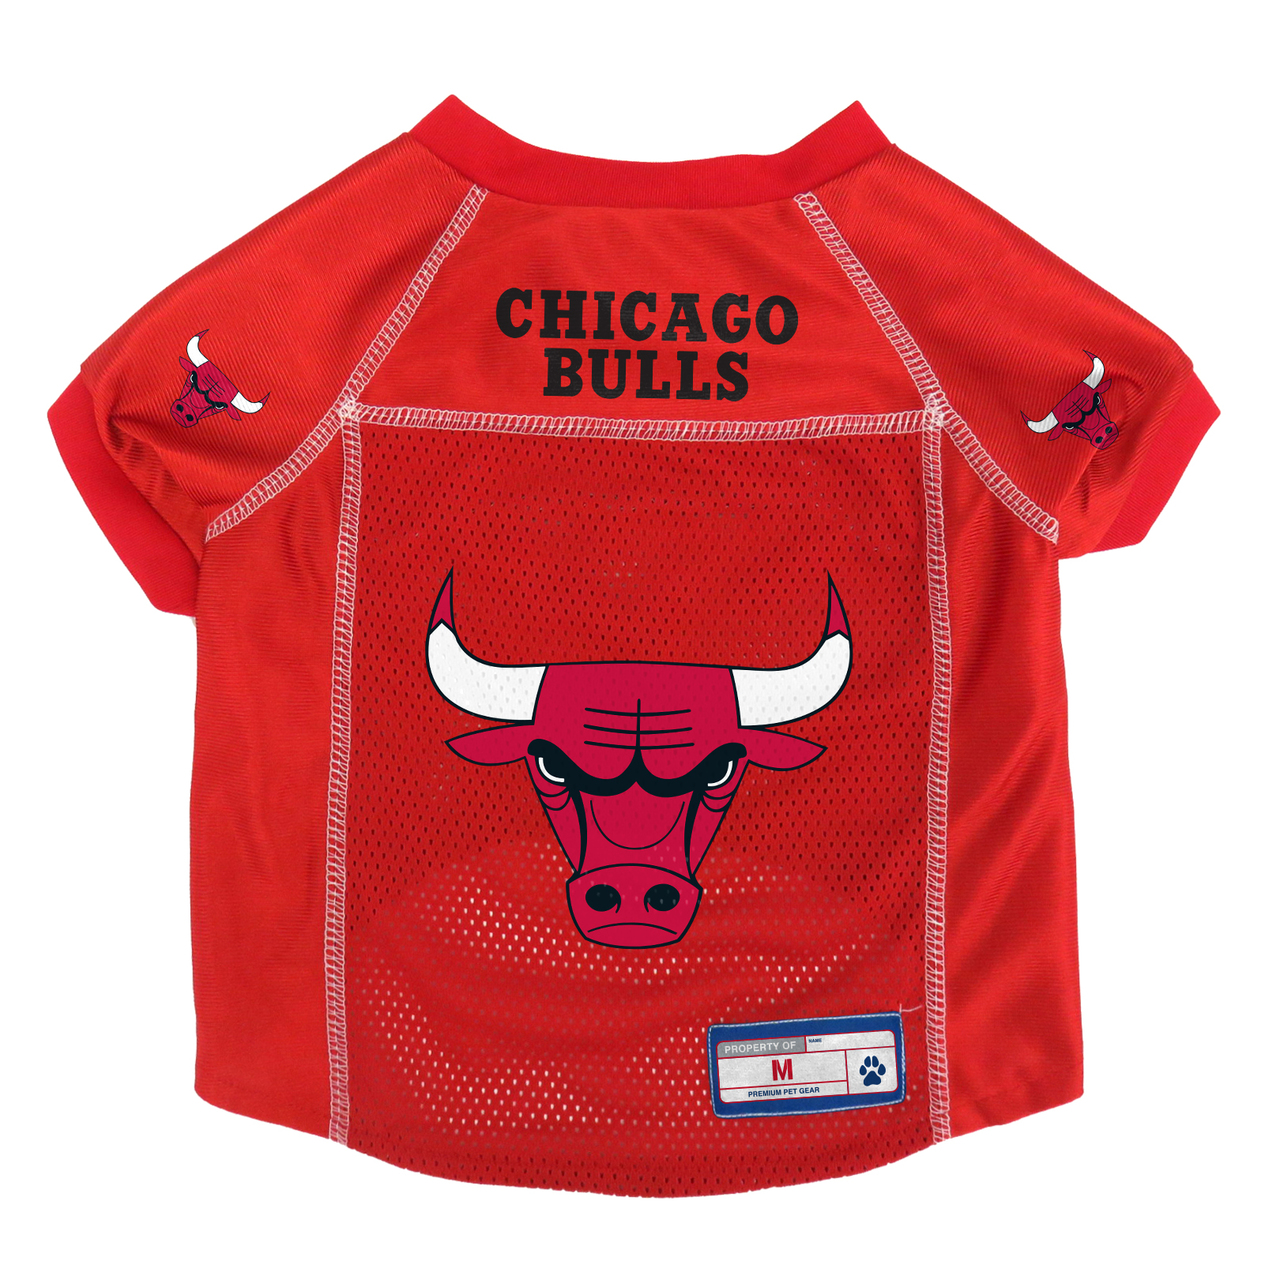 Chicago Bulls Pet Jersey Size M